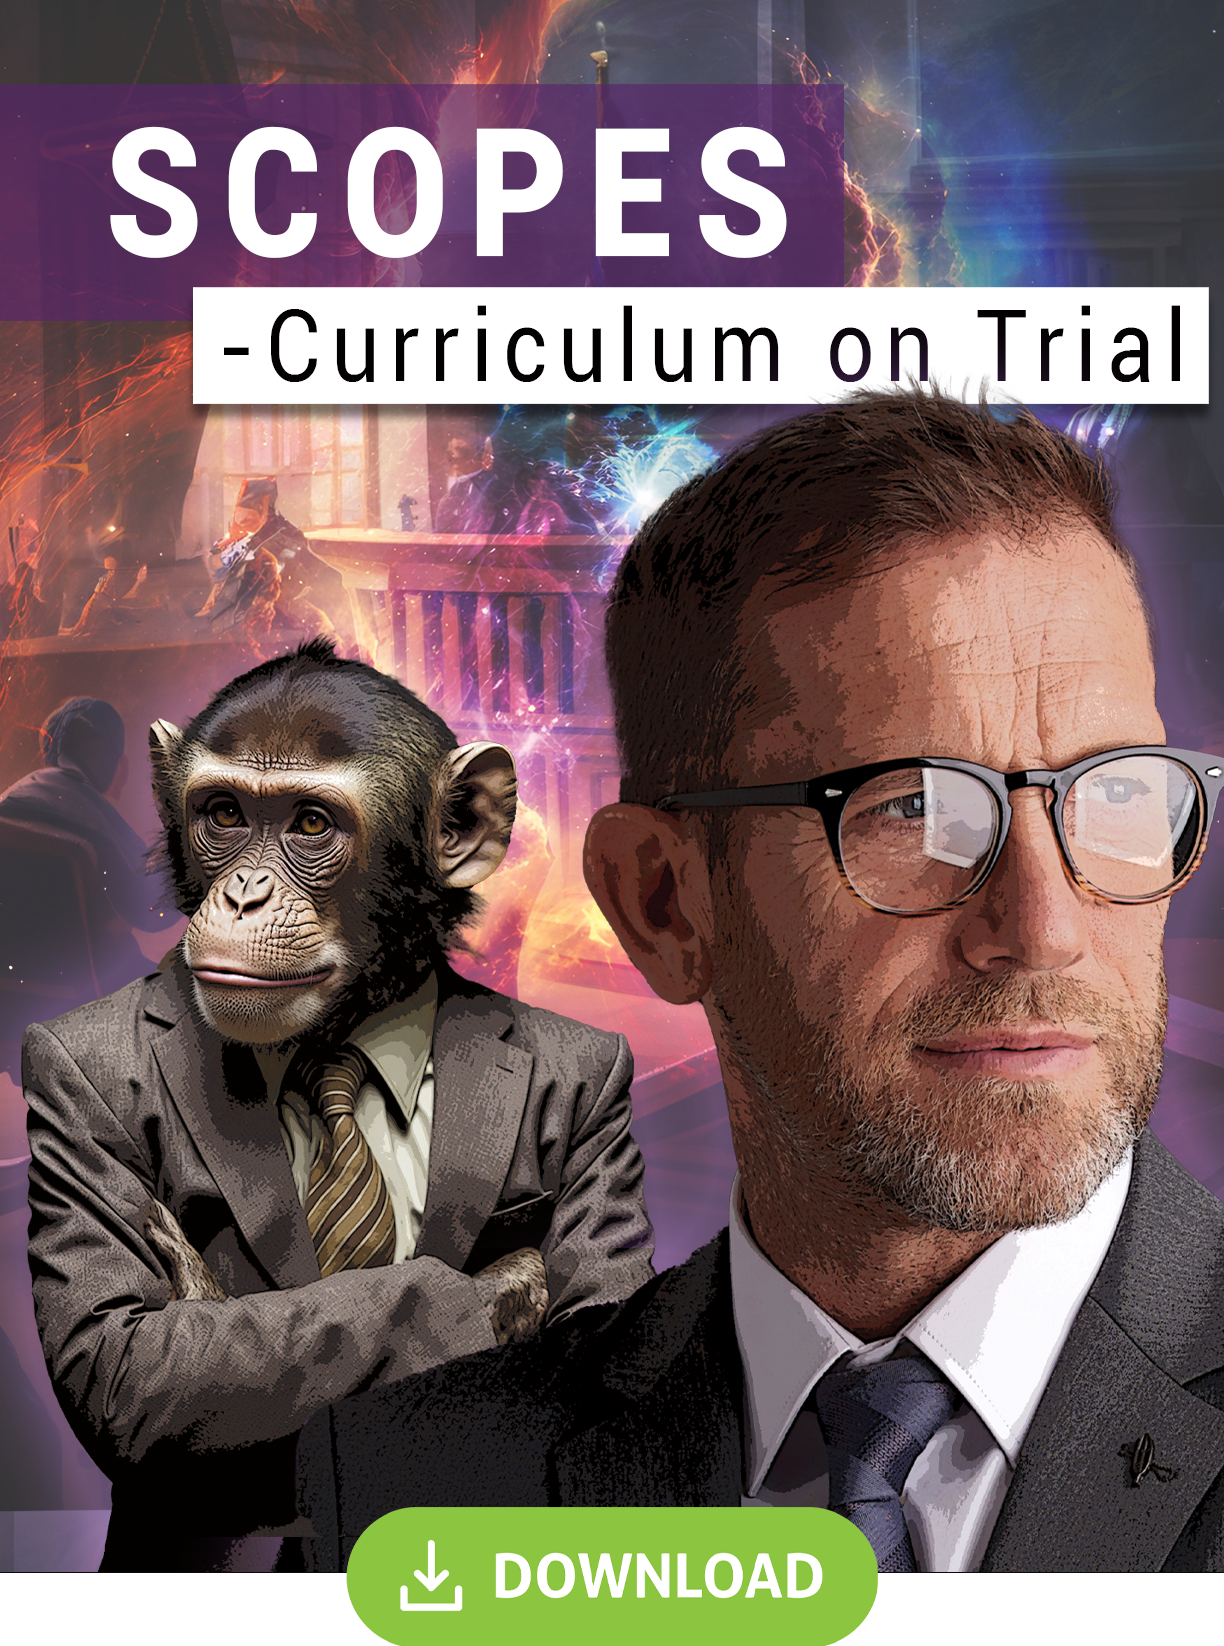 Scopes - Curriculum on Trial - Digital HD